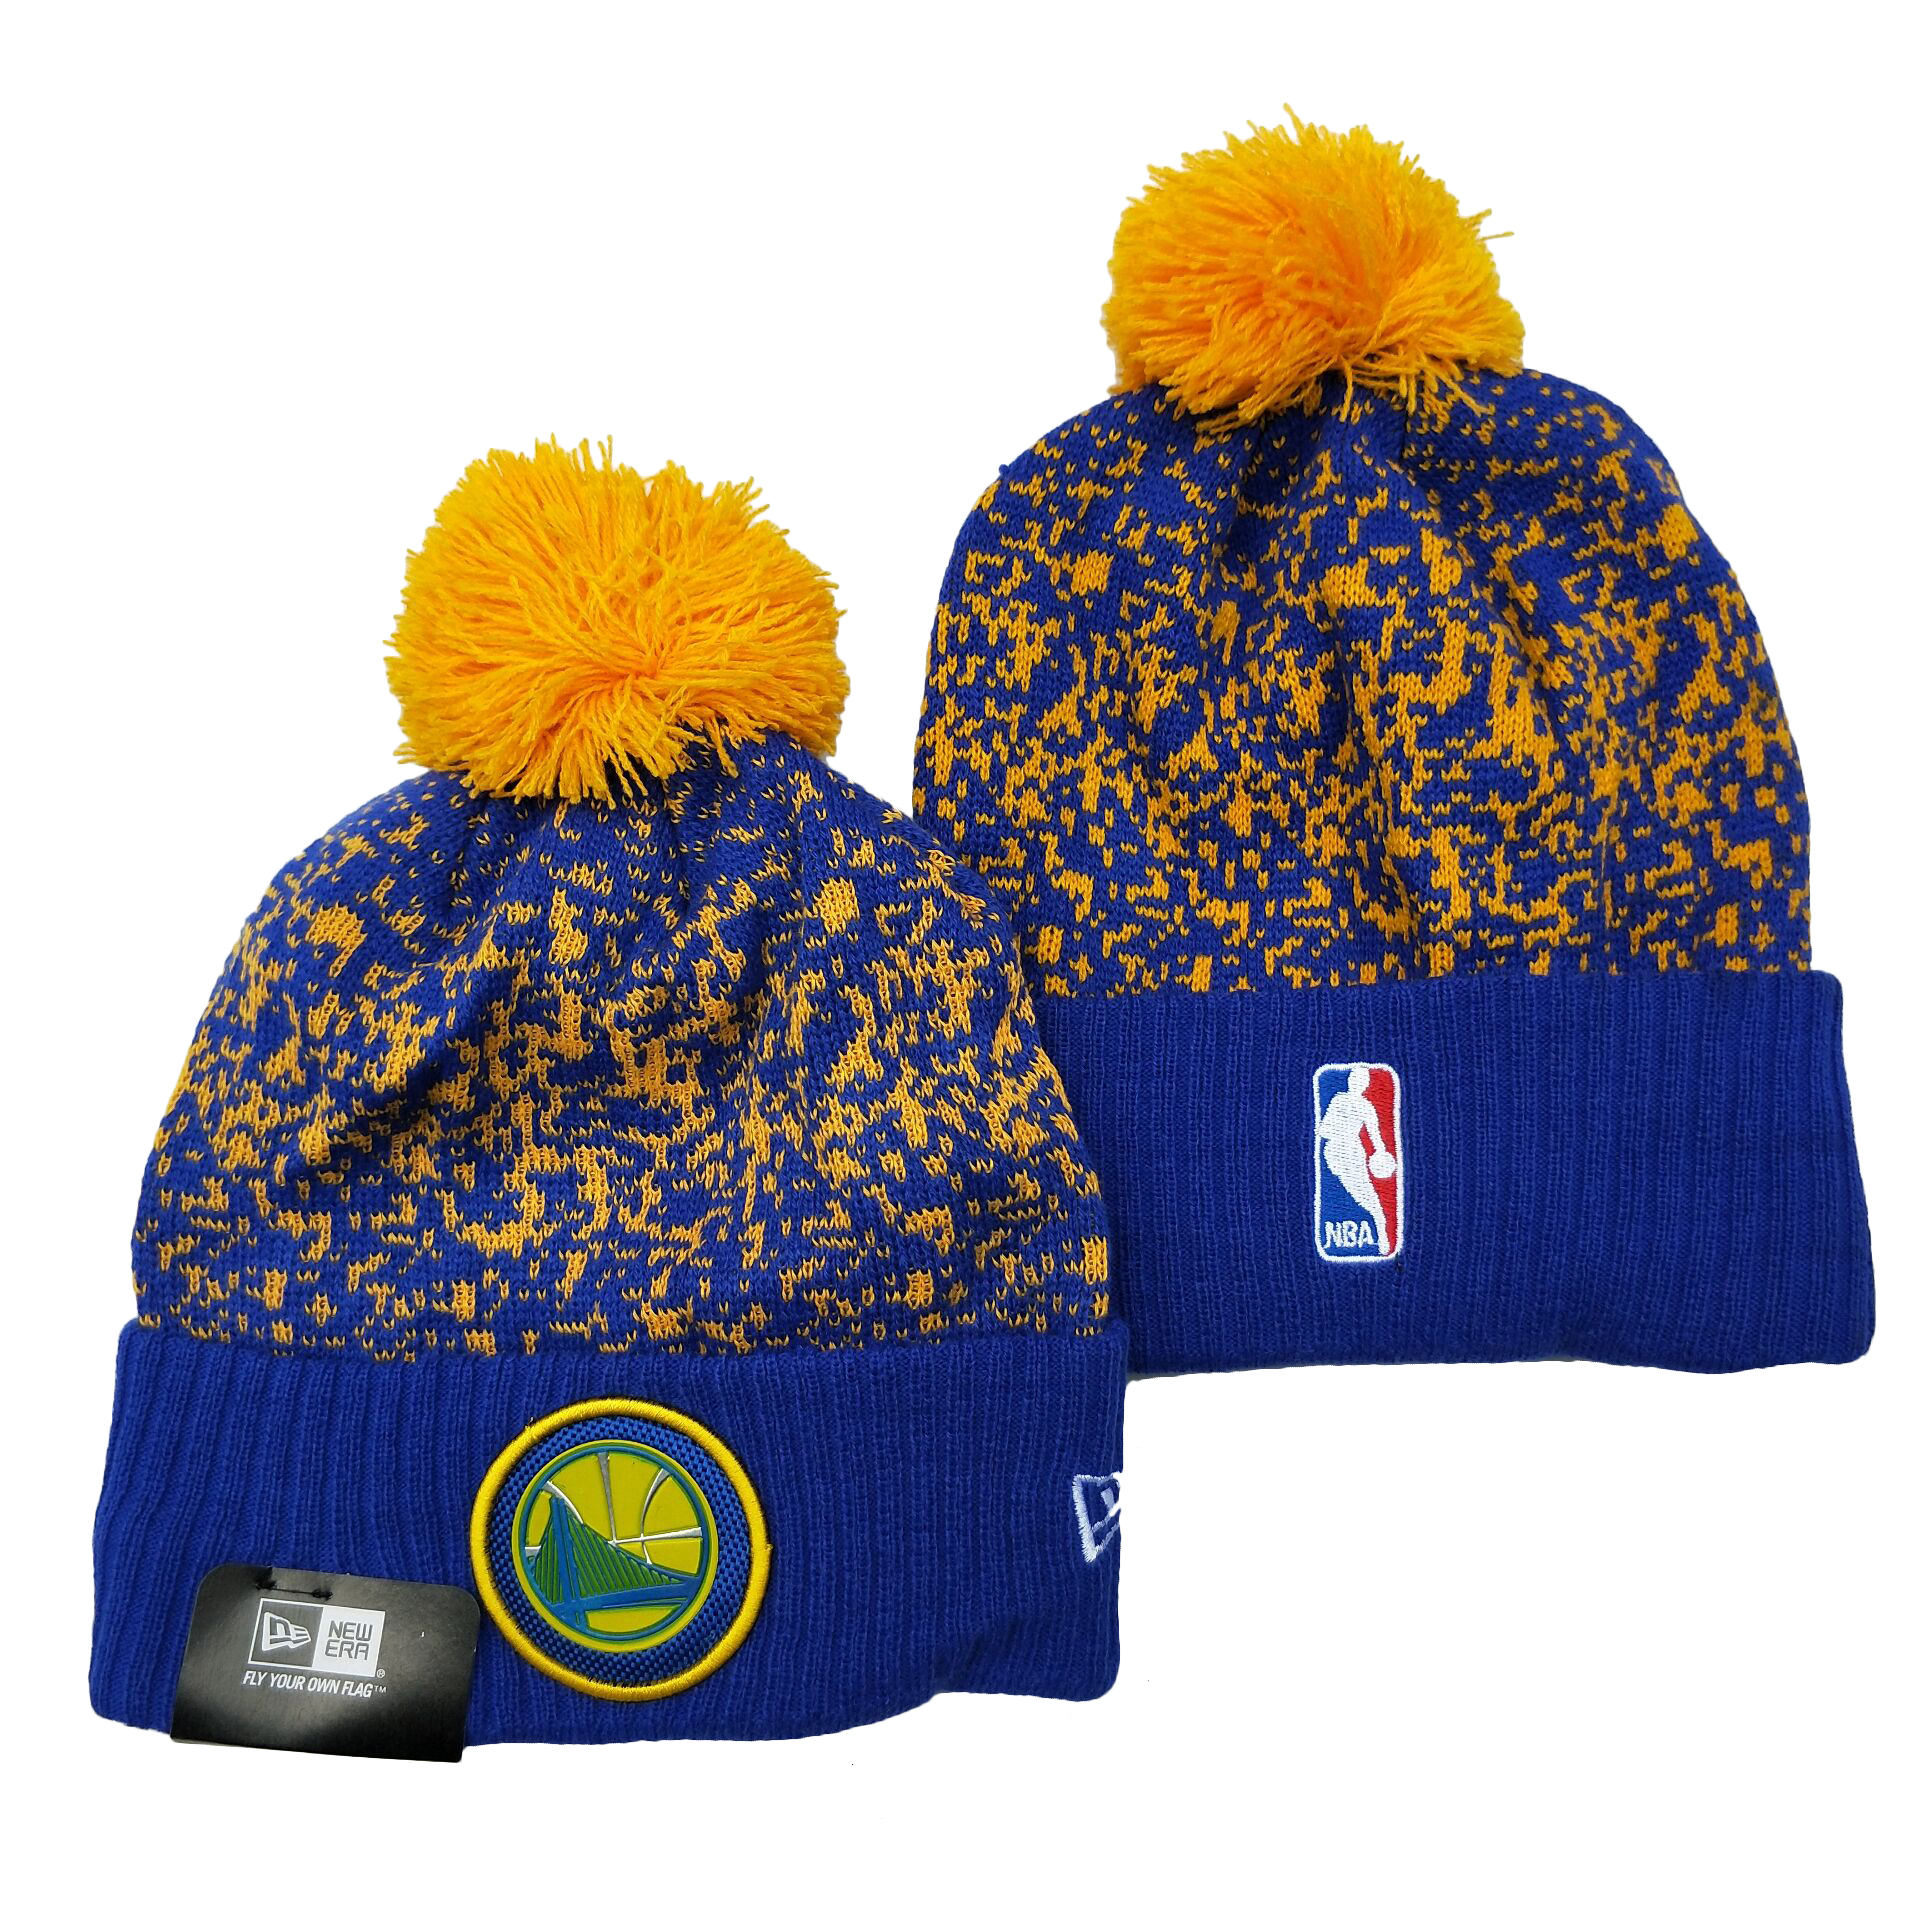 Golden State Warriors Knit Hats 029